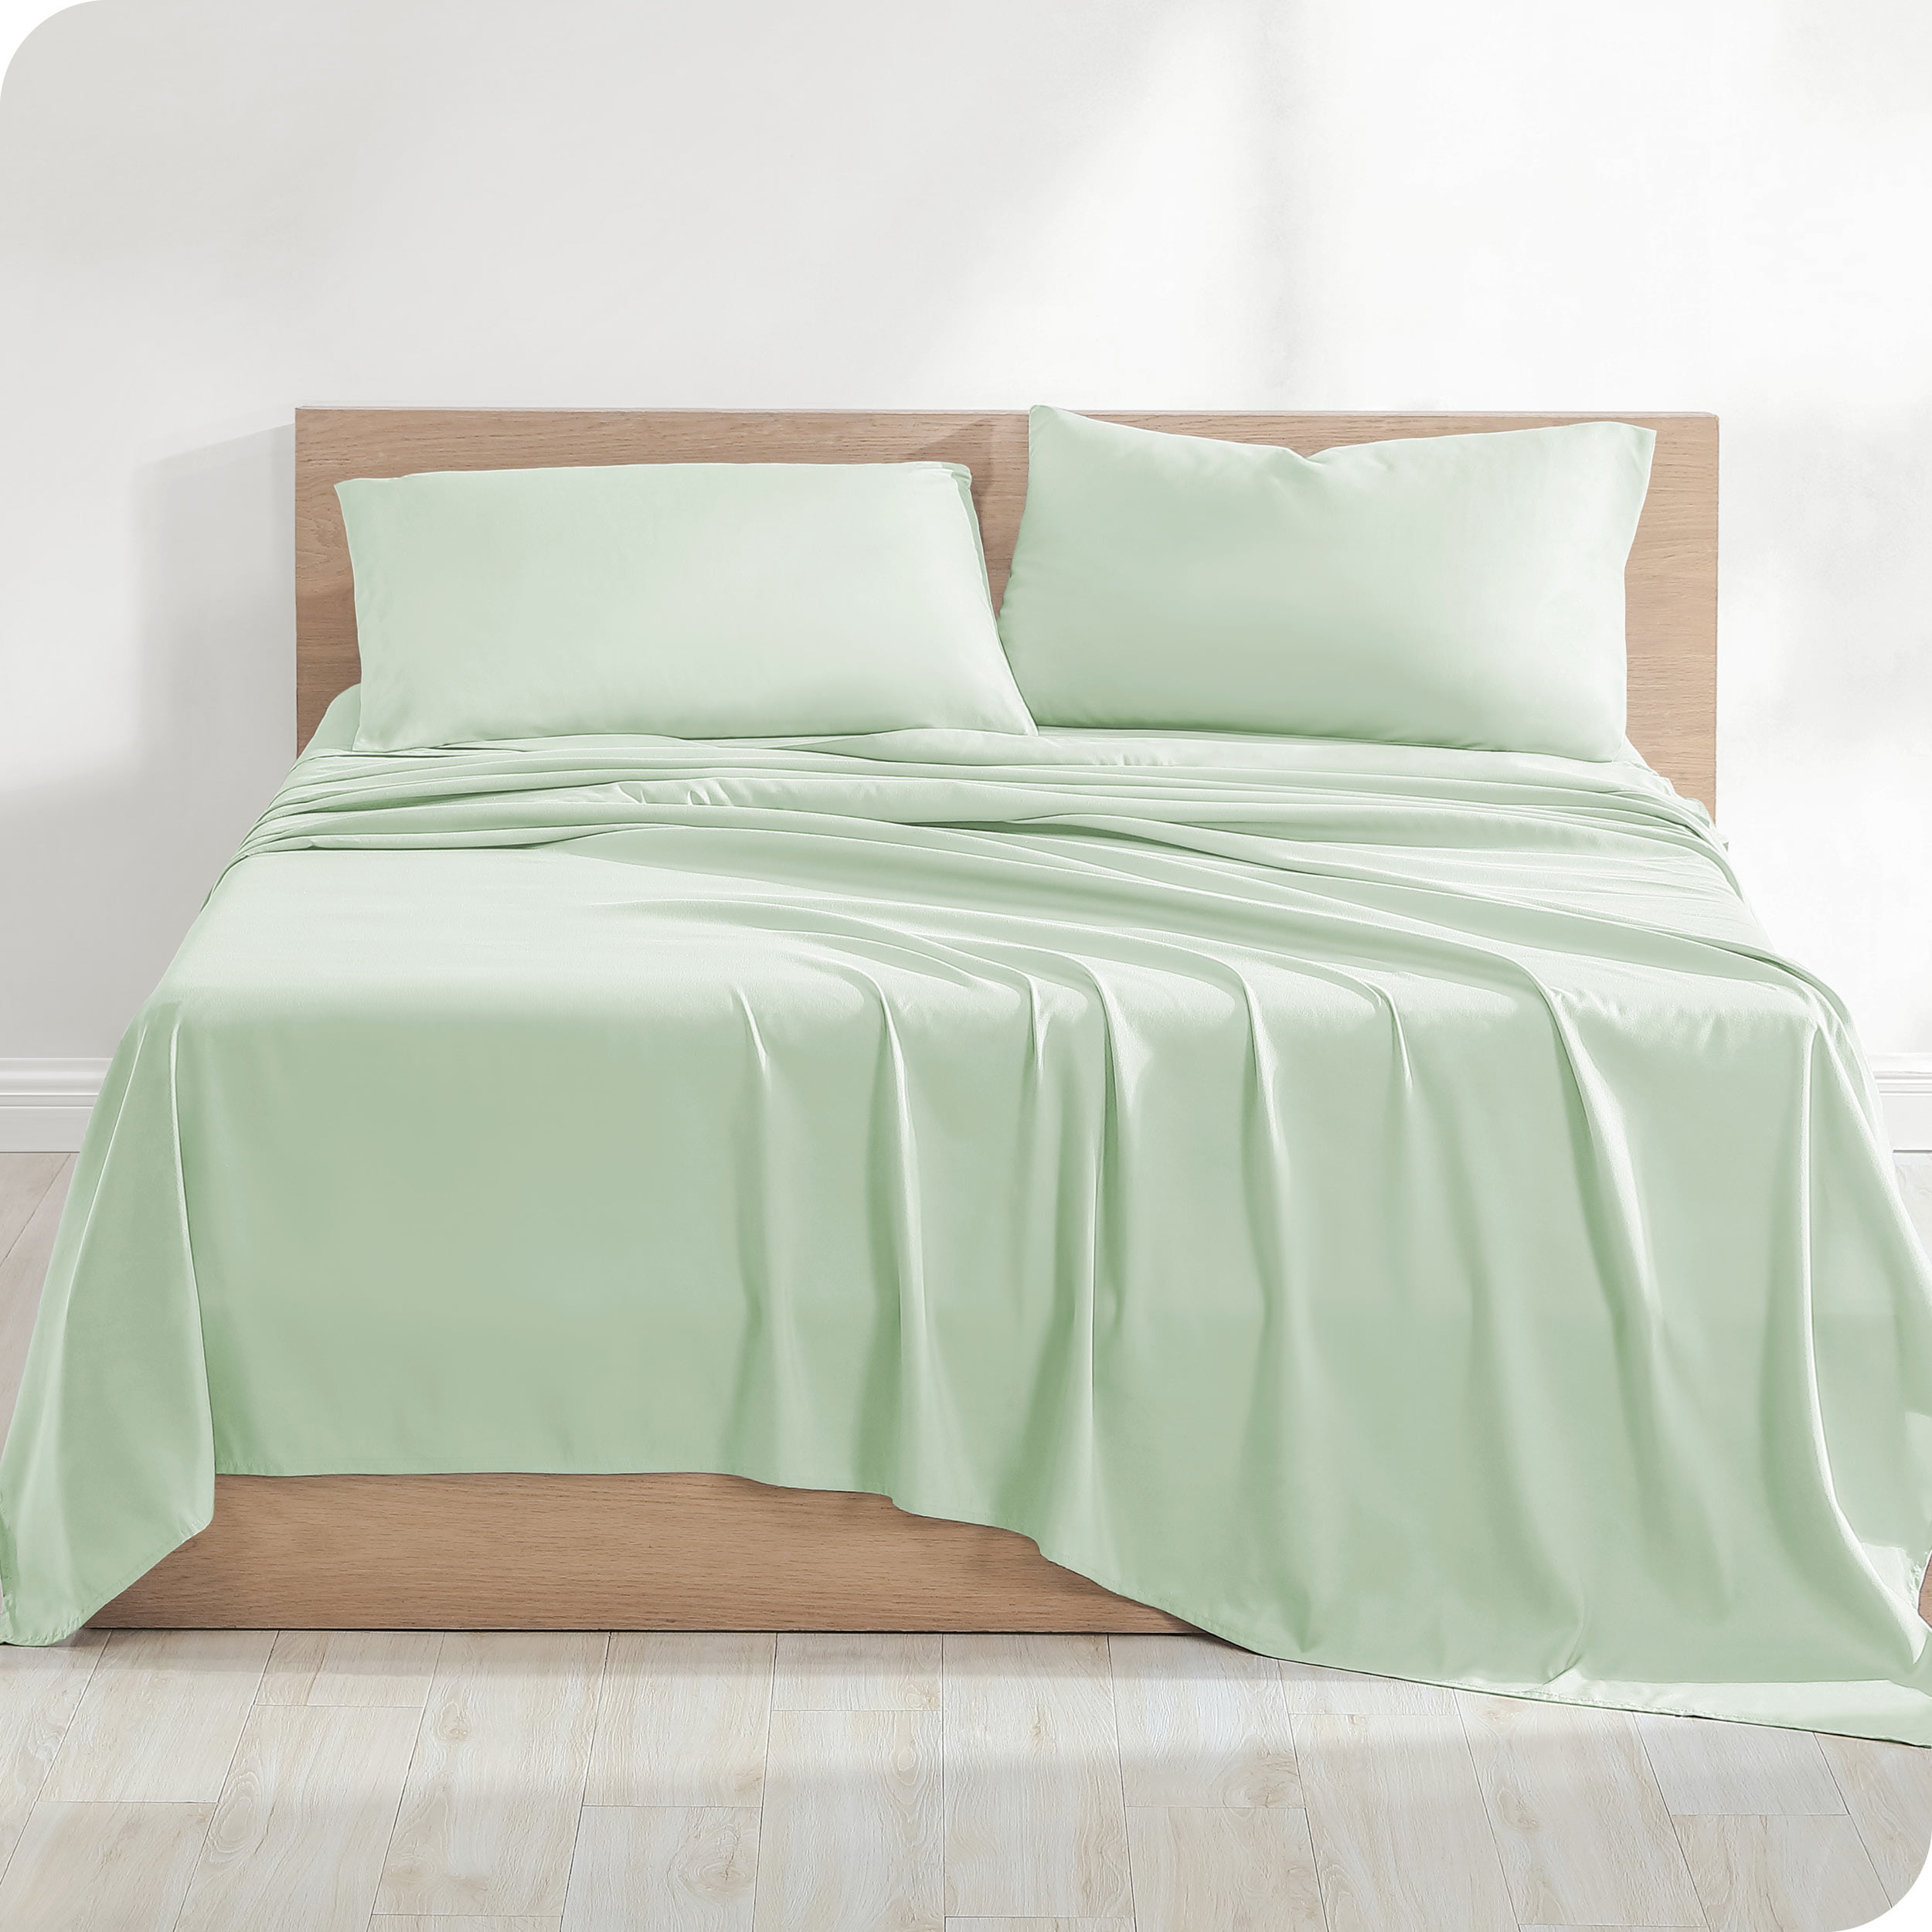 Bare Home 100 Organic Cotton Sheet Set, Light Green Queen Size Sheets